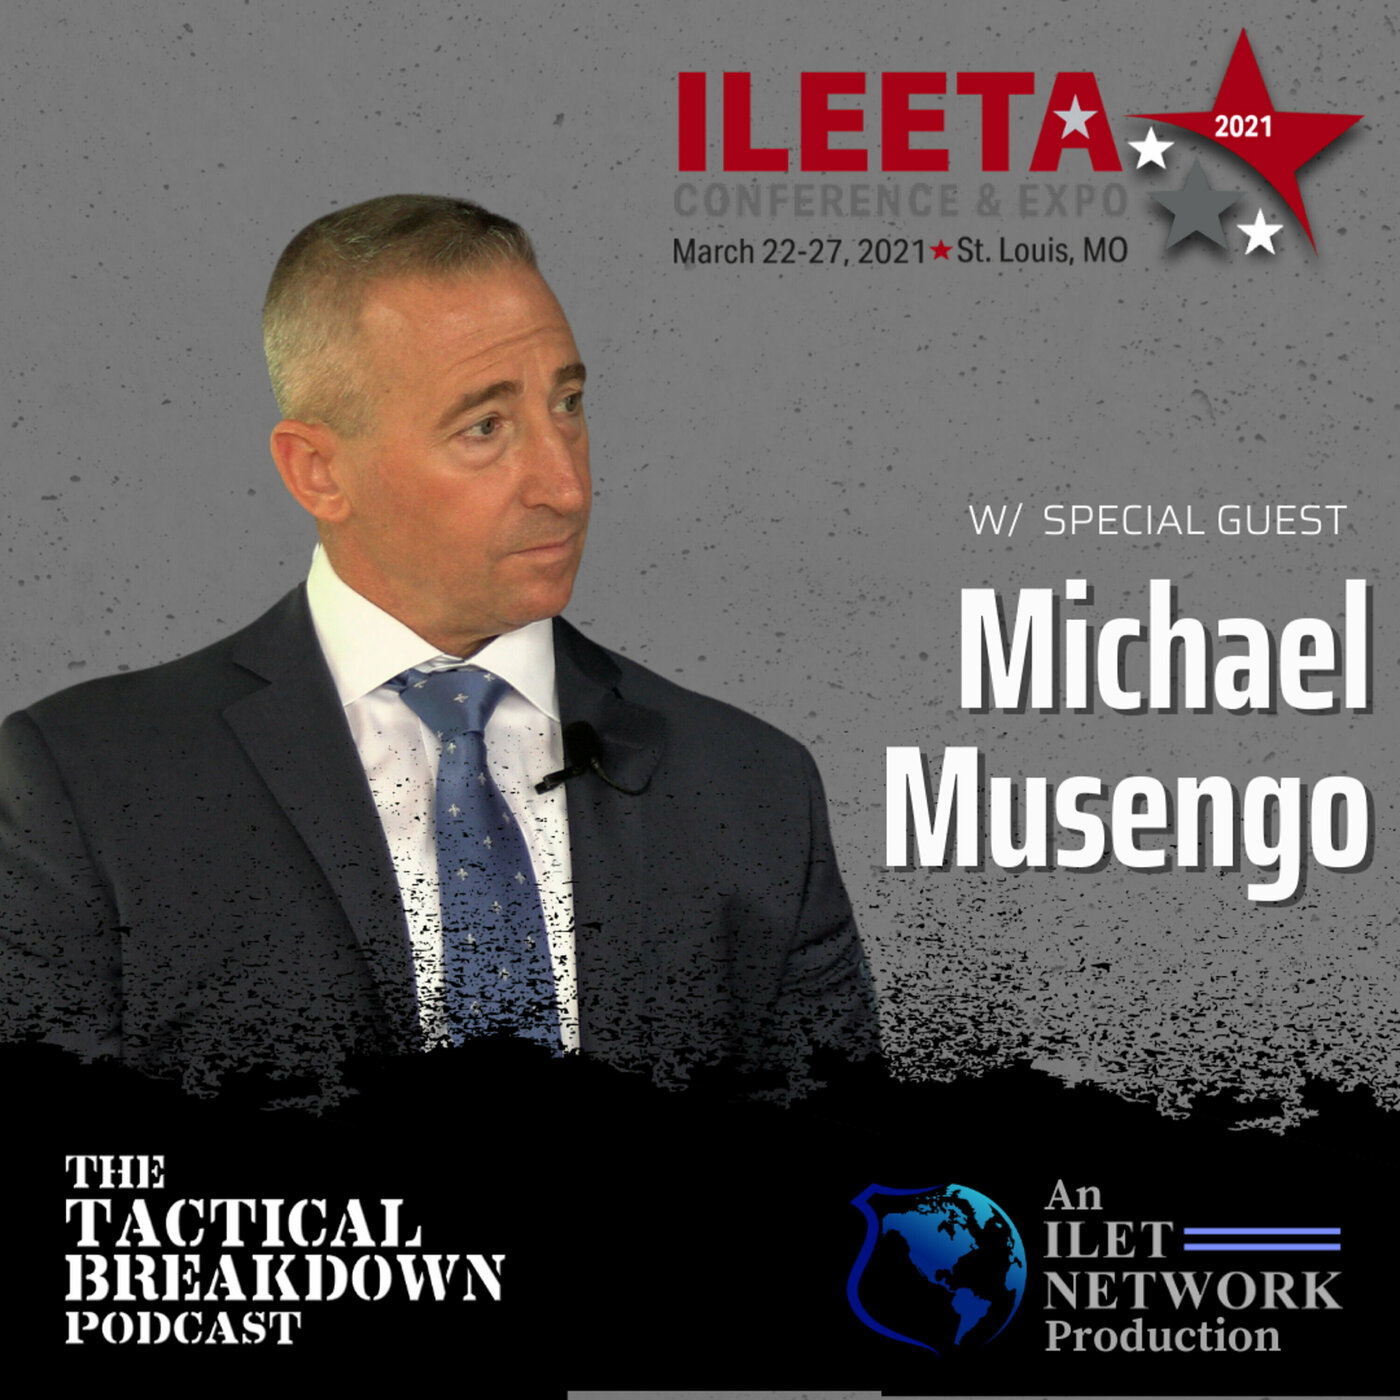 Michael Musengo: Advanced Instructional Methods at ILEETA